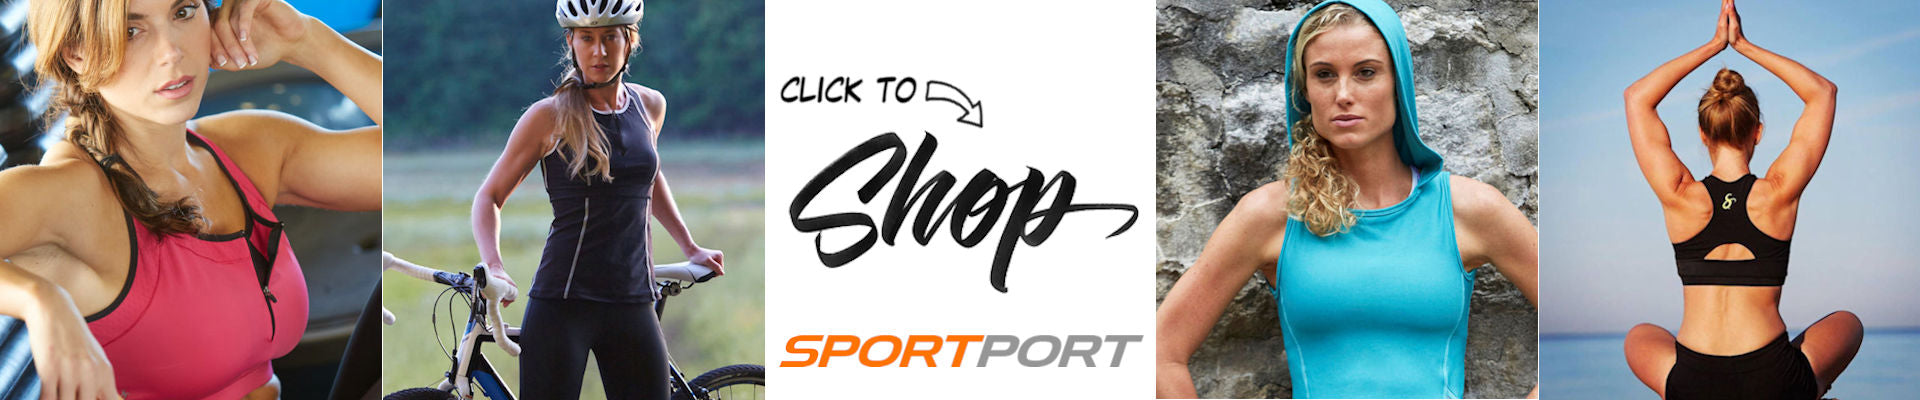 shop sportport womens activewear